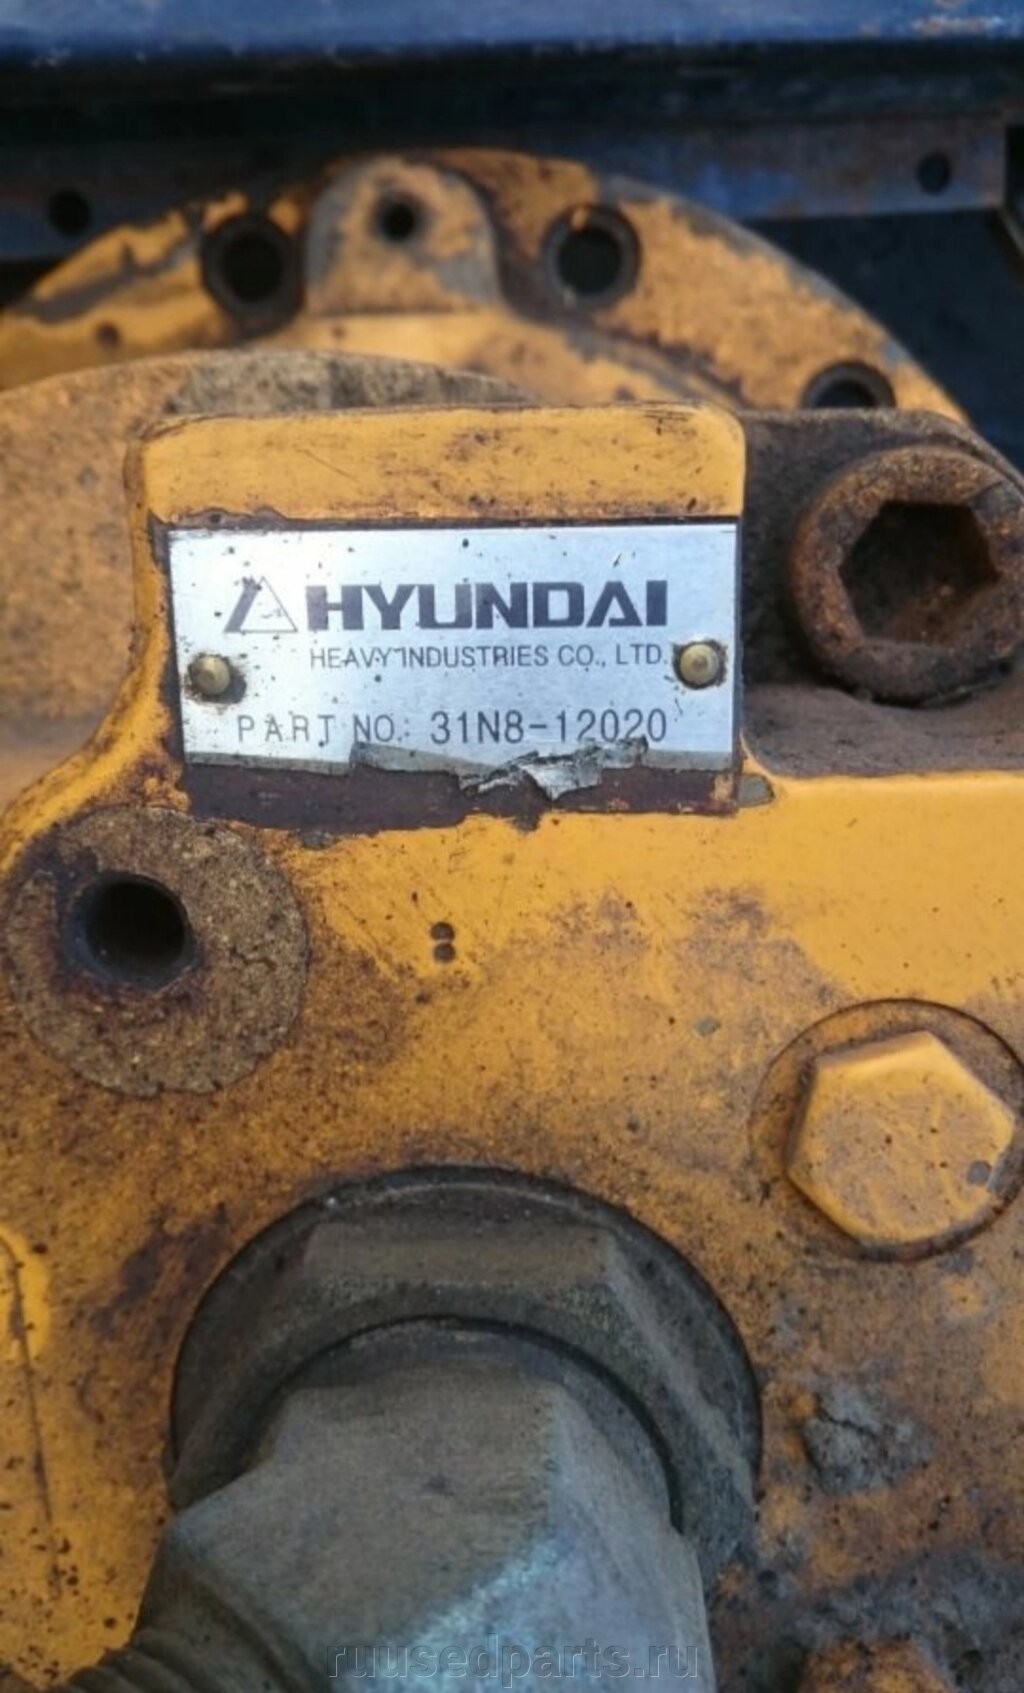 Гидромотор поворота для Hyundai R 290 и 320 от компании ГК "МашСервис" Запчасти и Ремонт спецтехники - фото 1